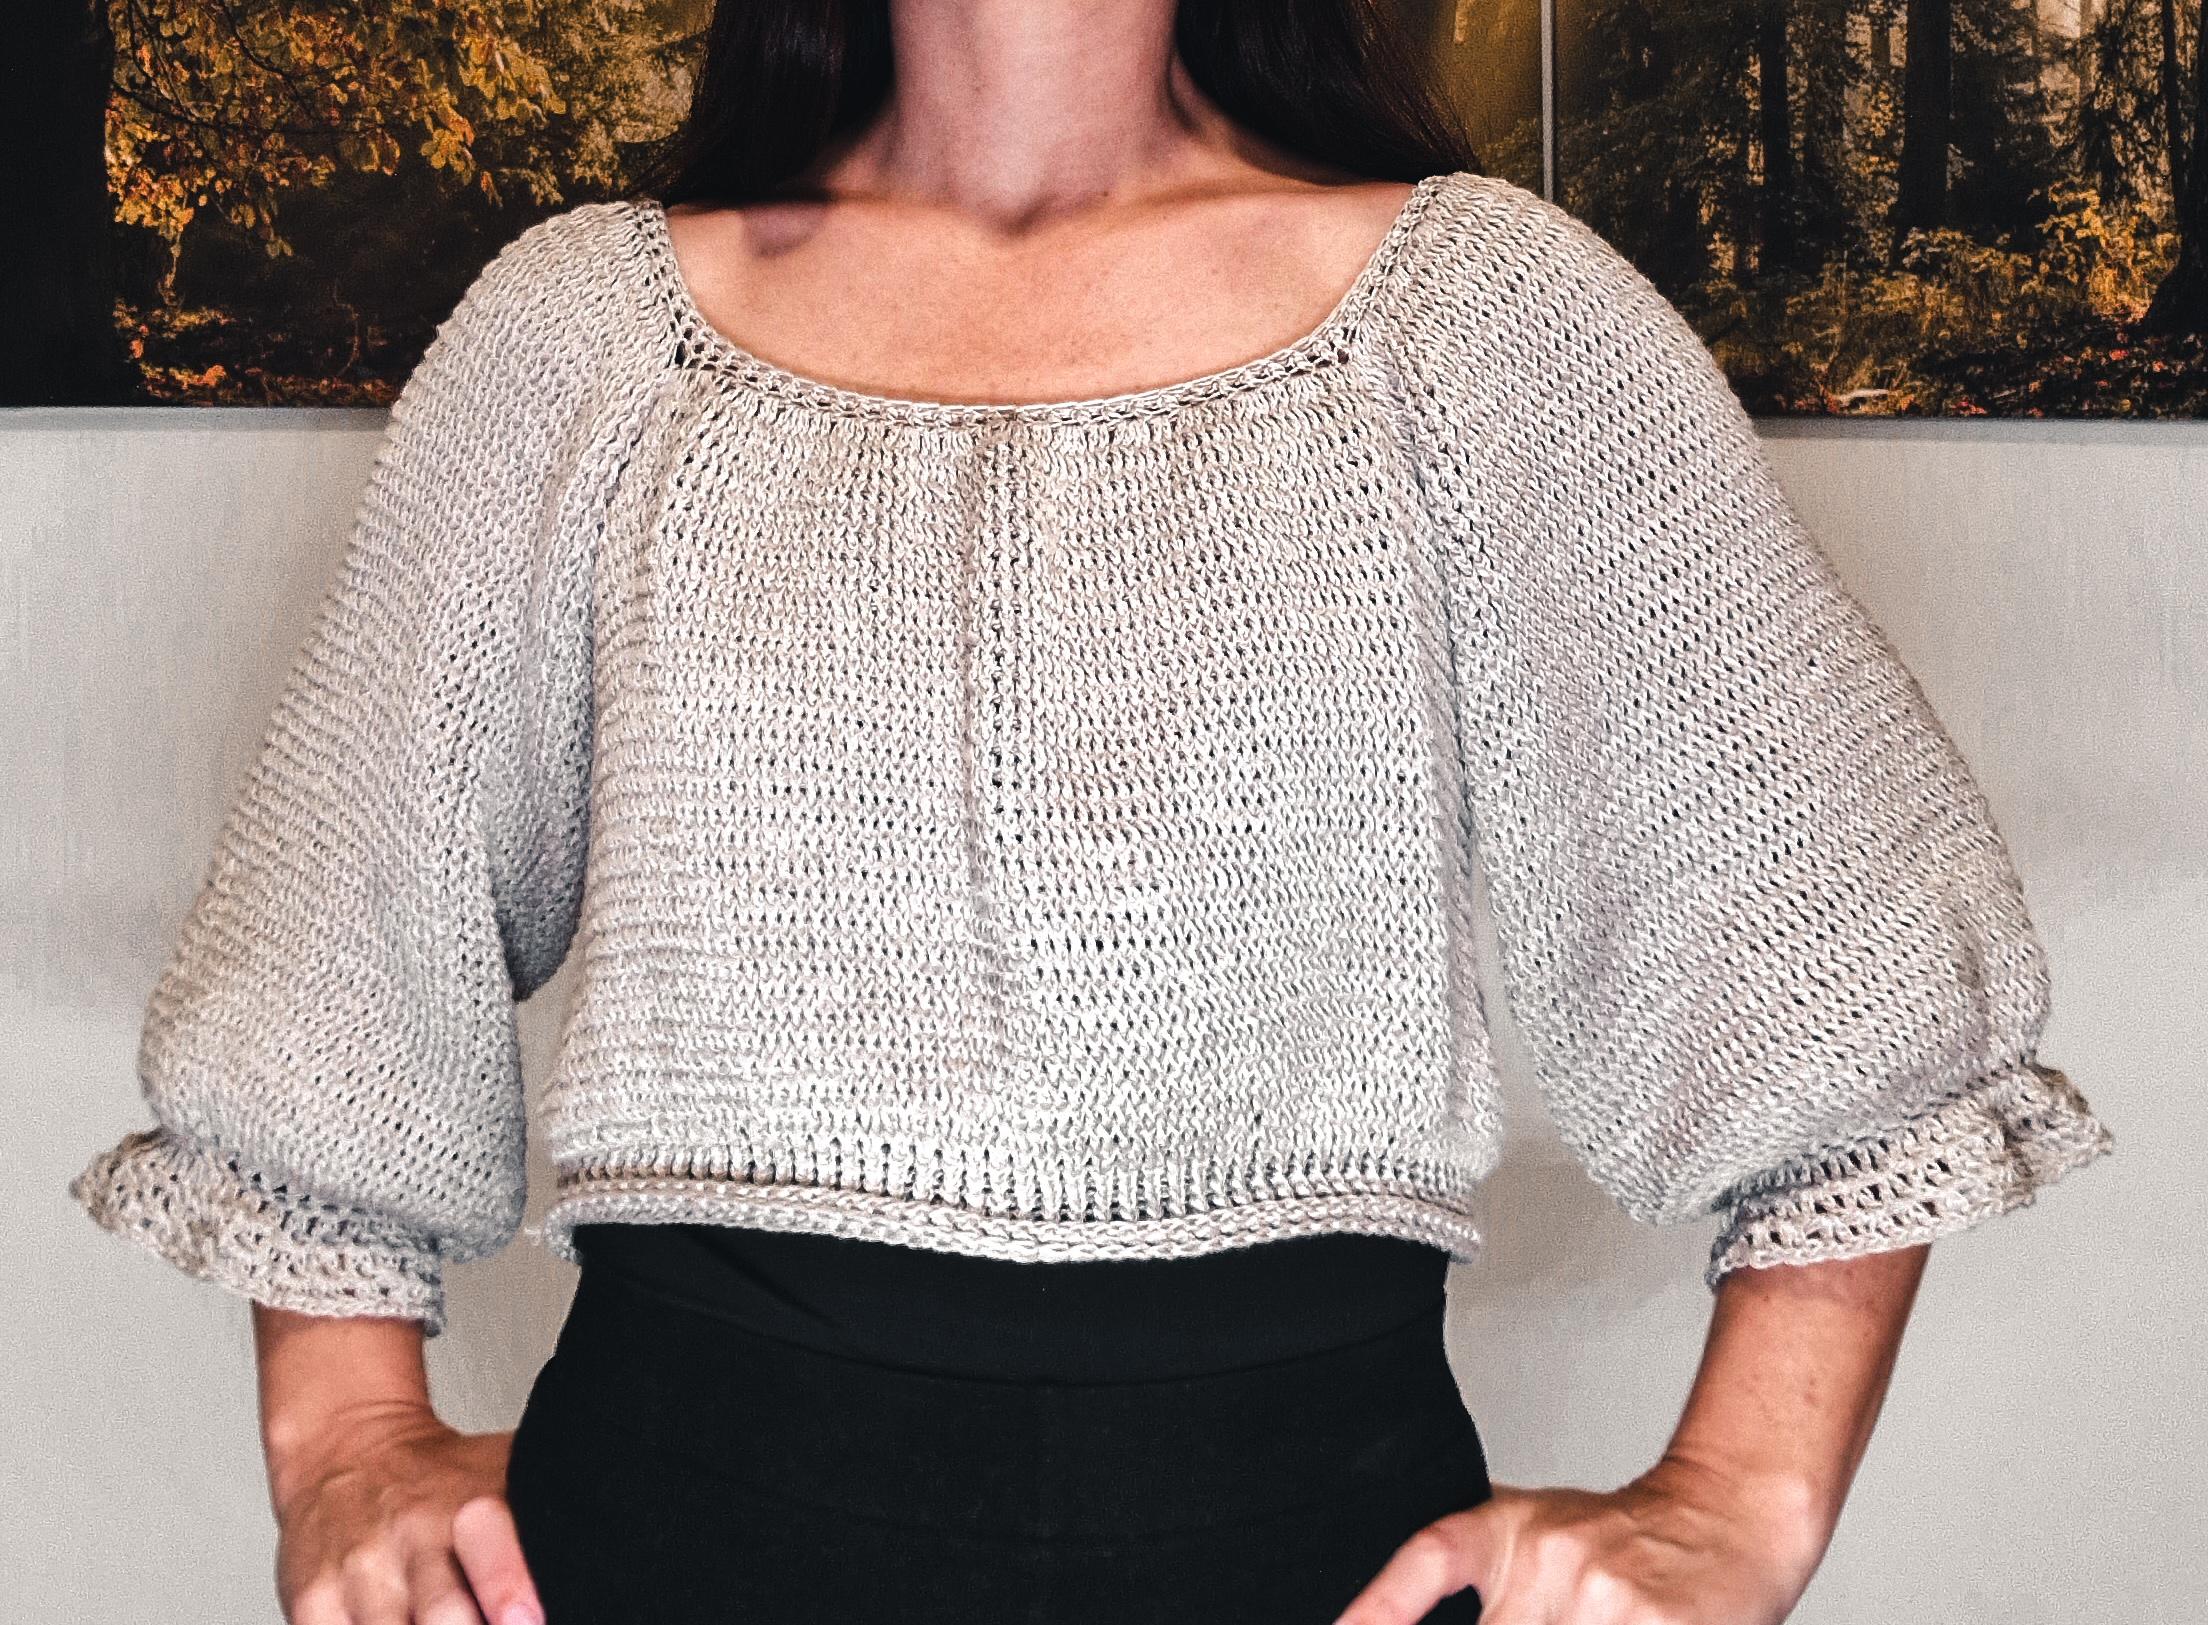 How to crochet the Ruffle Raglan Crochet Sweater 